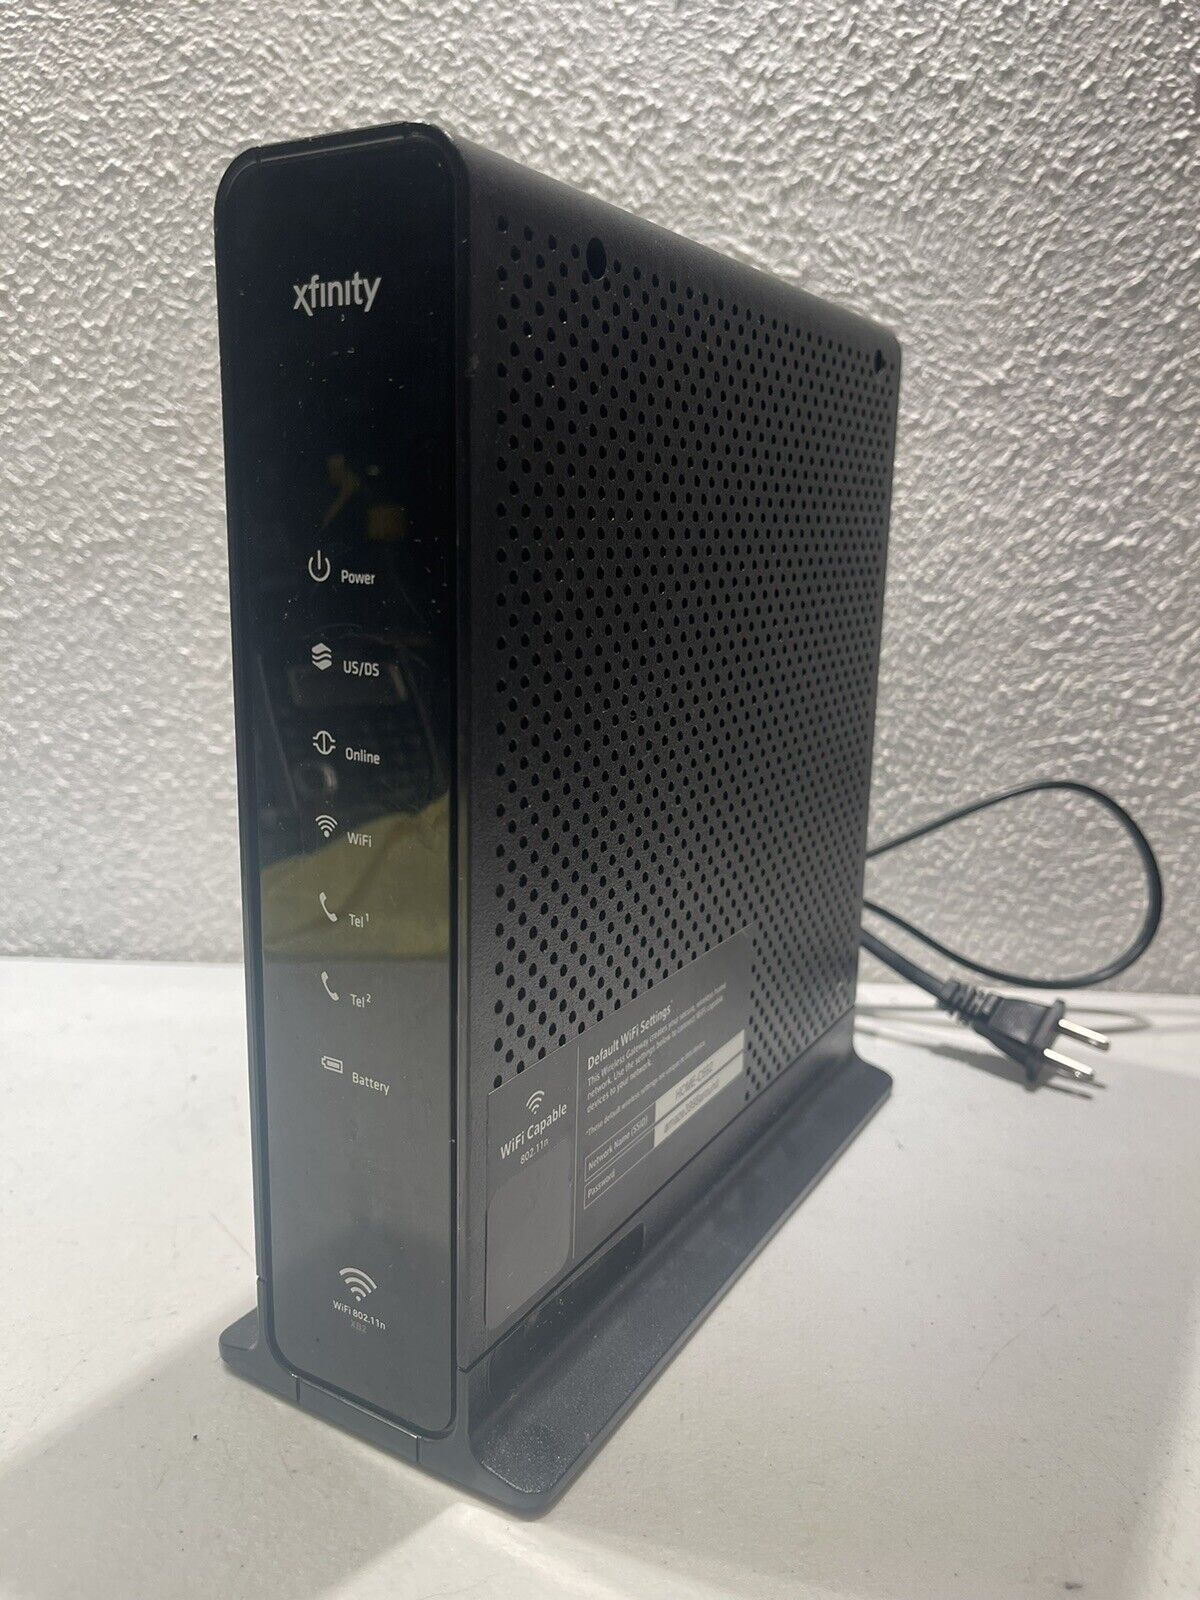 Xfinity Modem Gateway Router ARRIS TG862G/CT WiFi 802.11n w/ Power Cord, #T